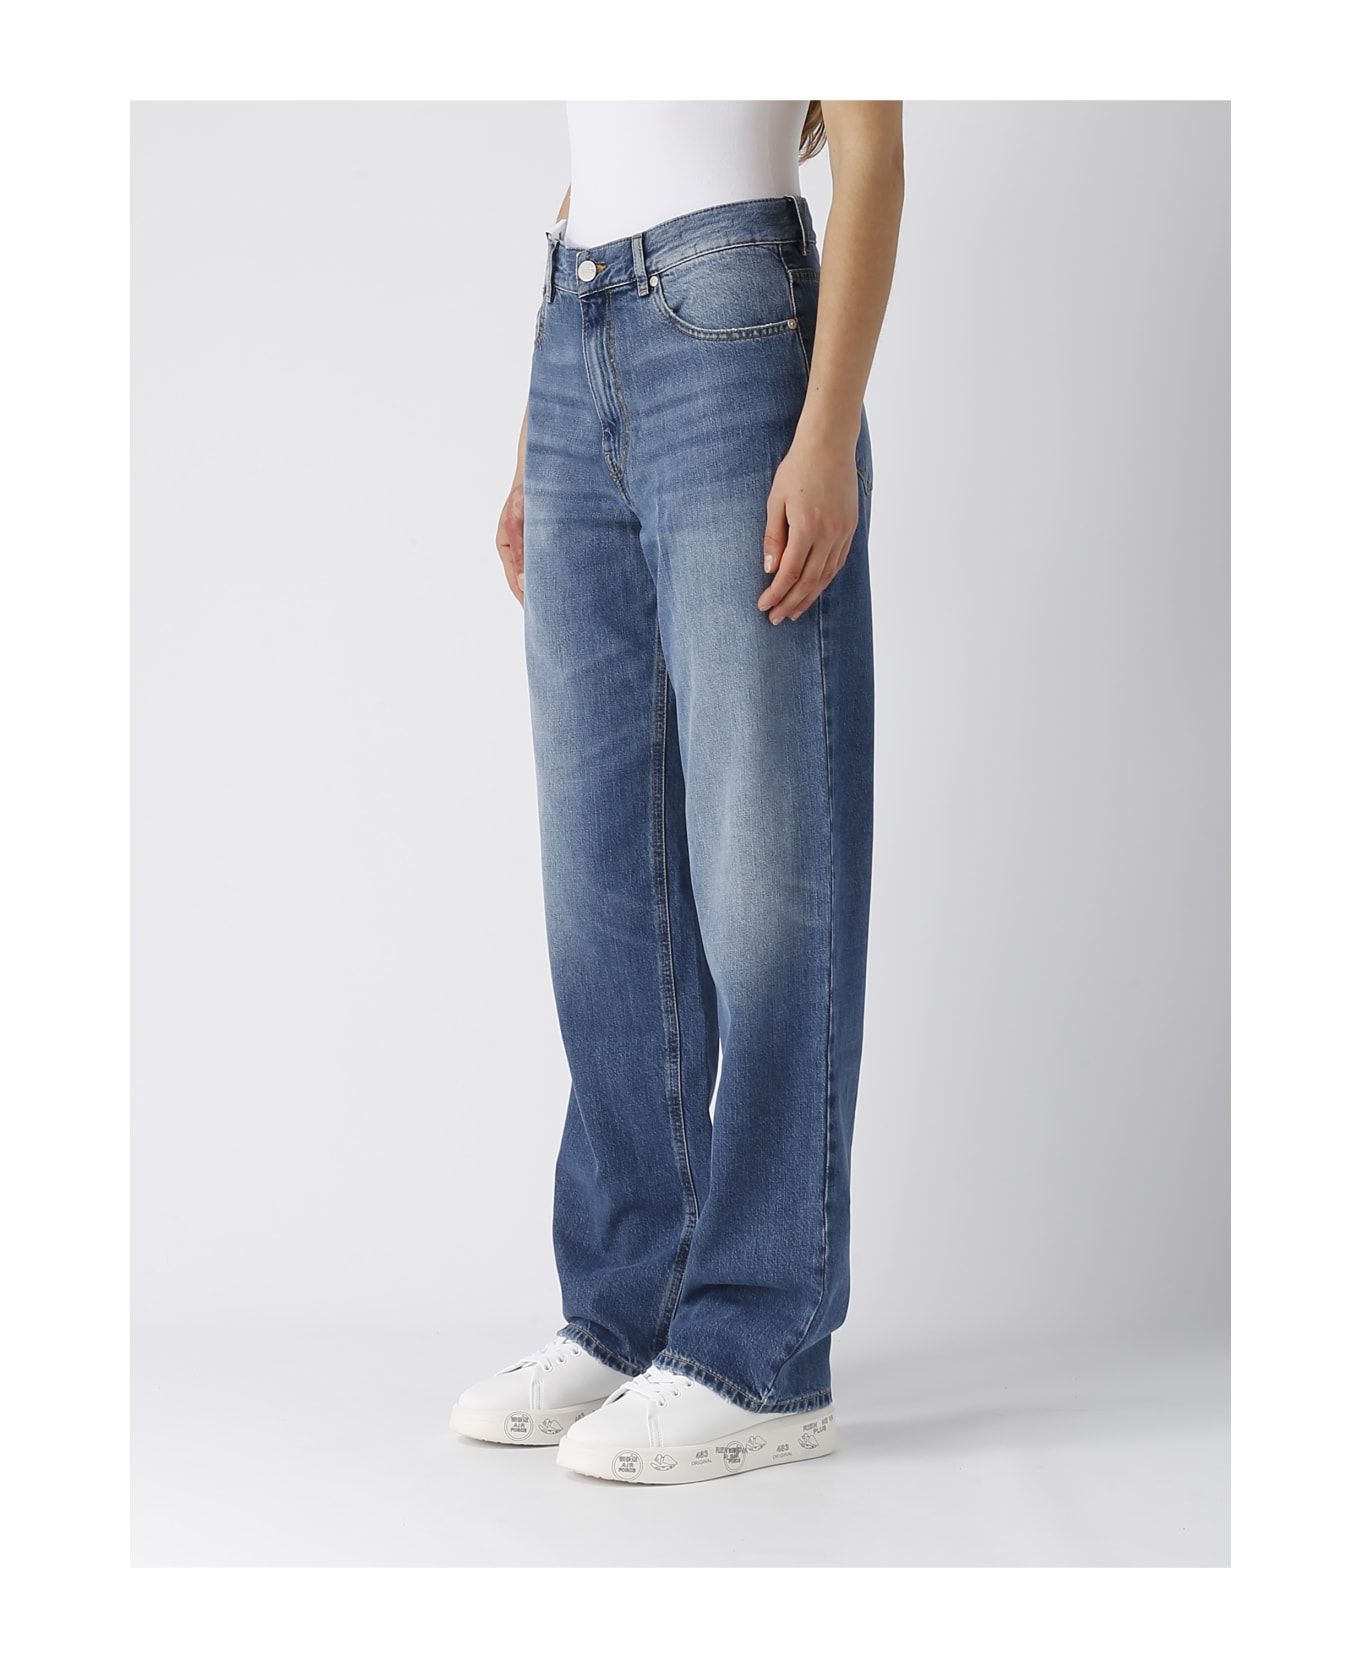 PT Torino Cotton Jeans - DENIM CHIARO